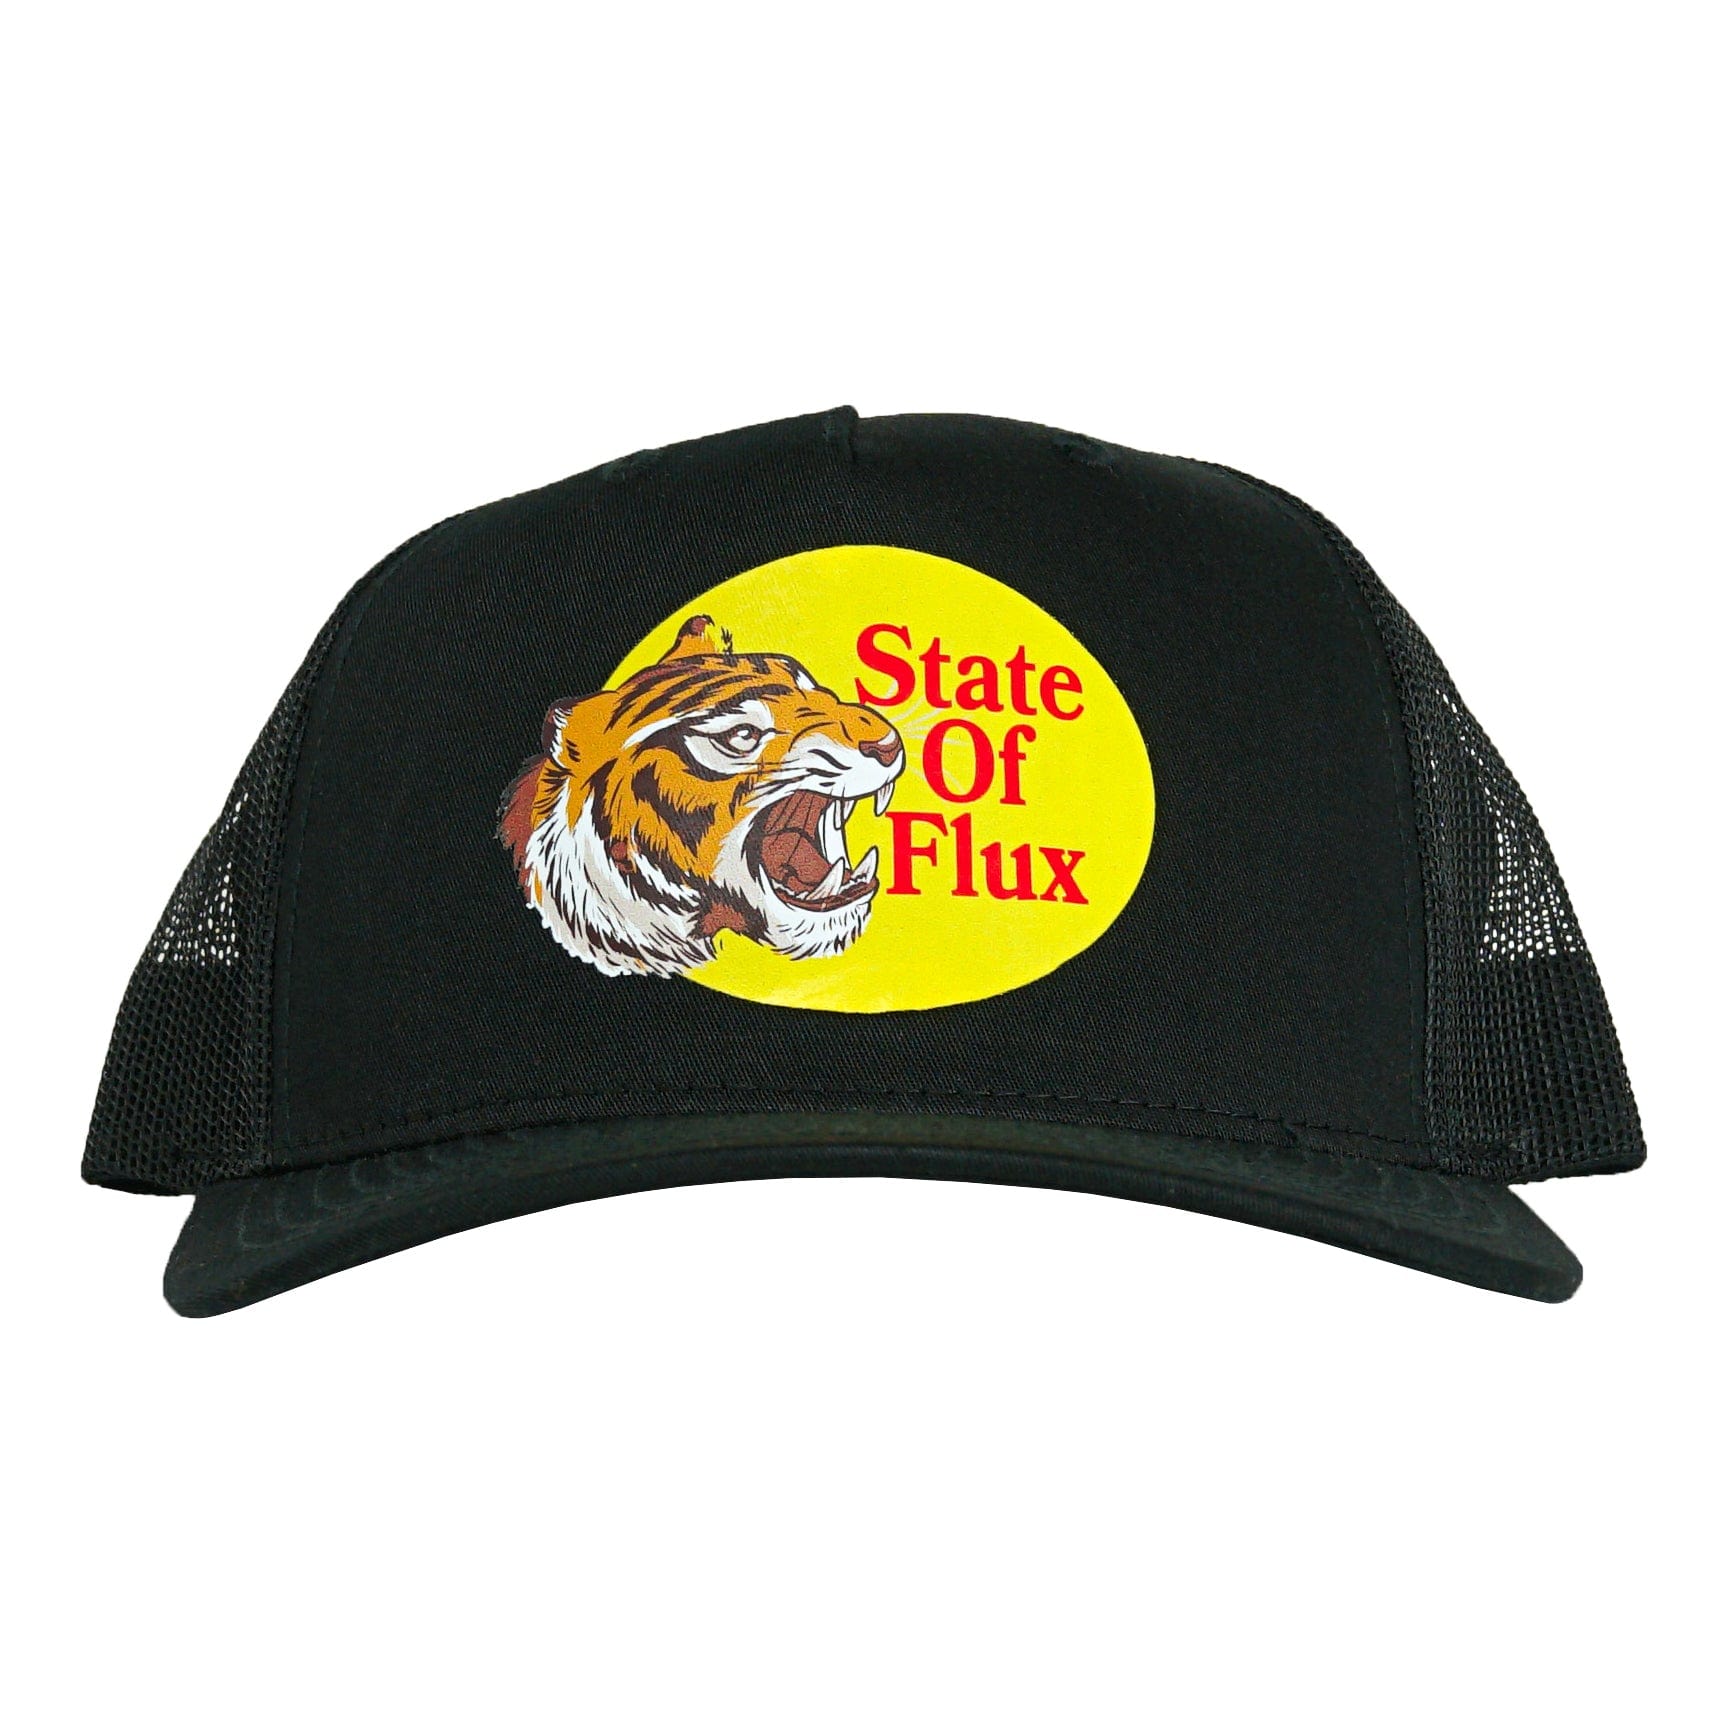 Tiger Pro Trucker Hat in black